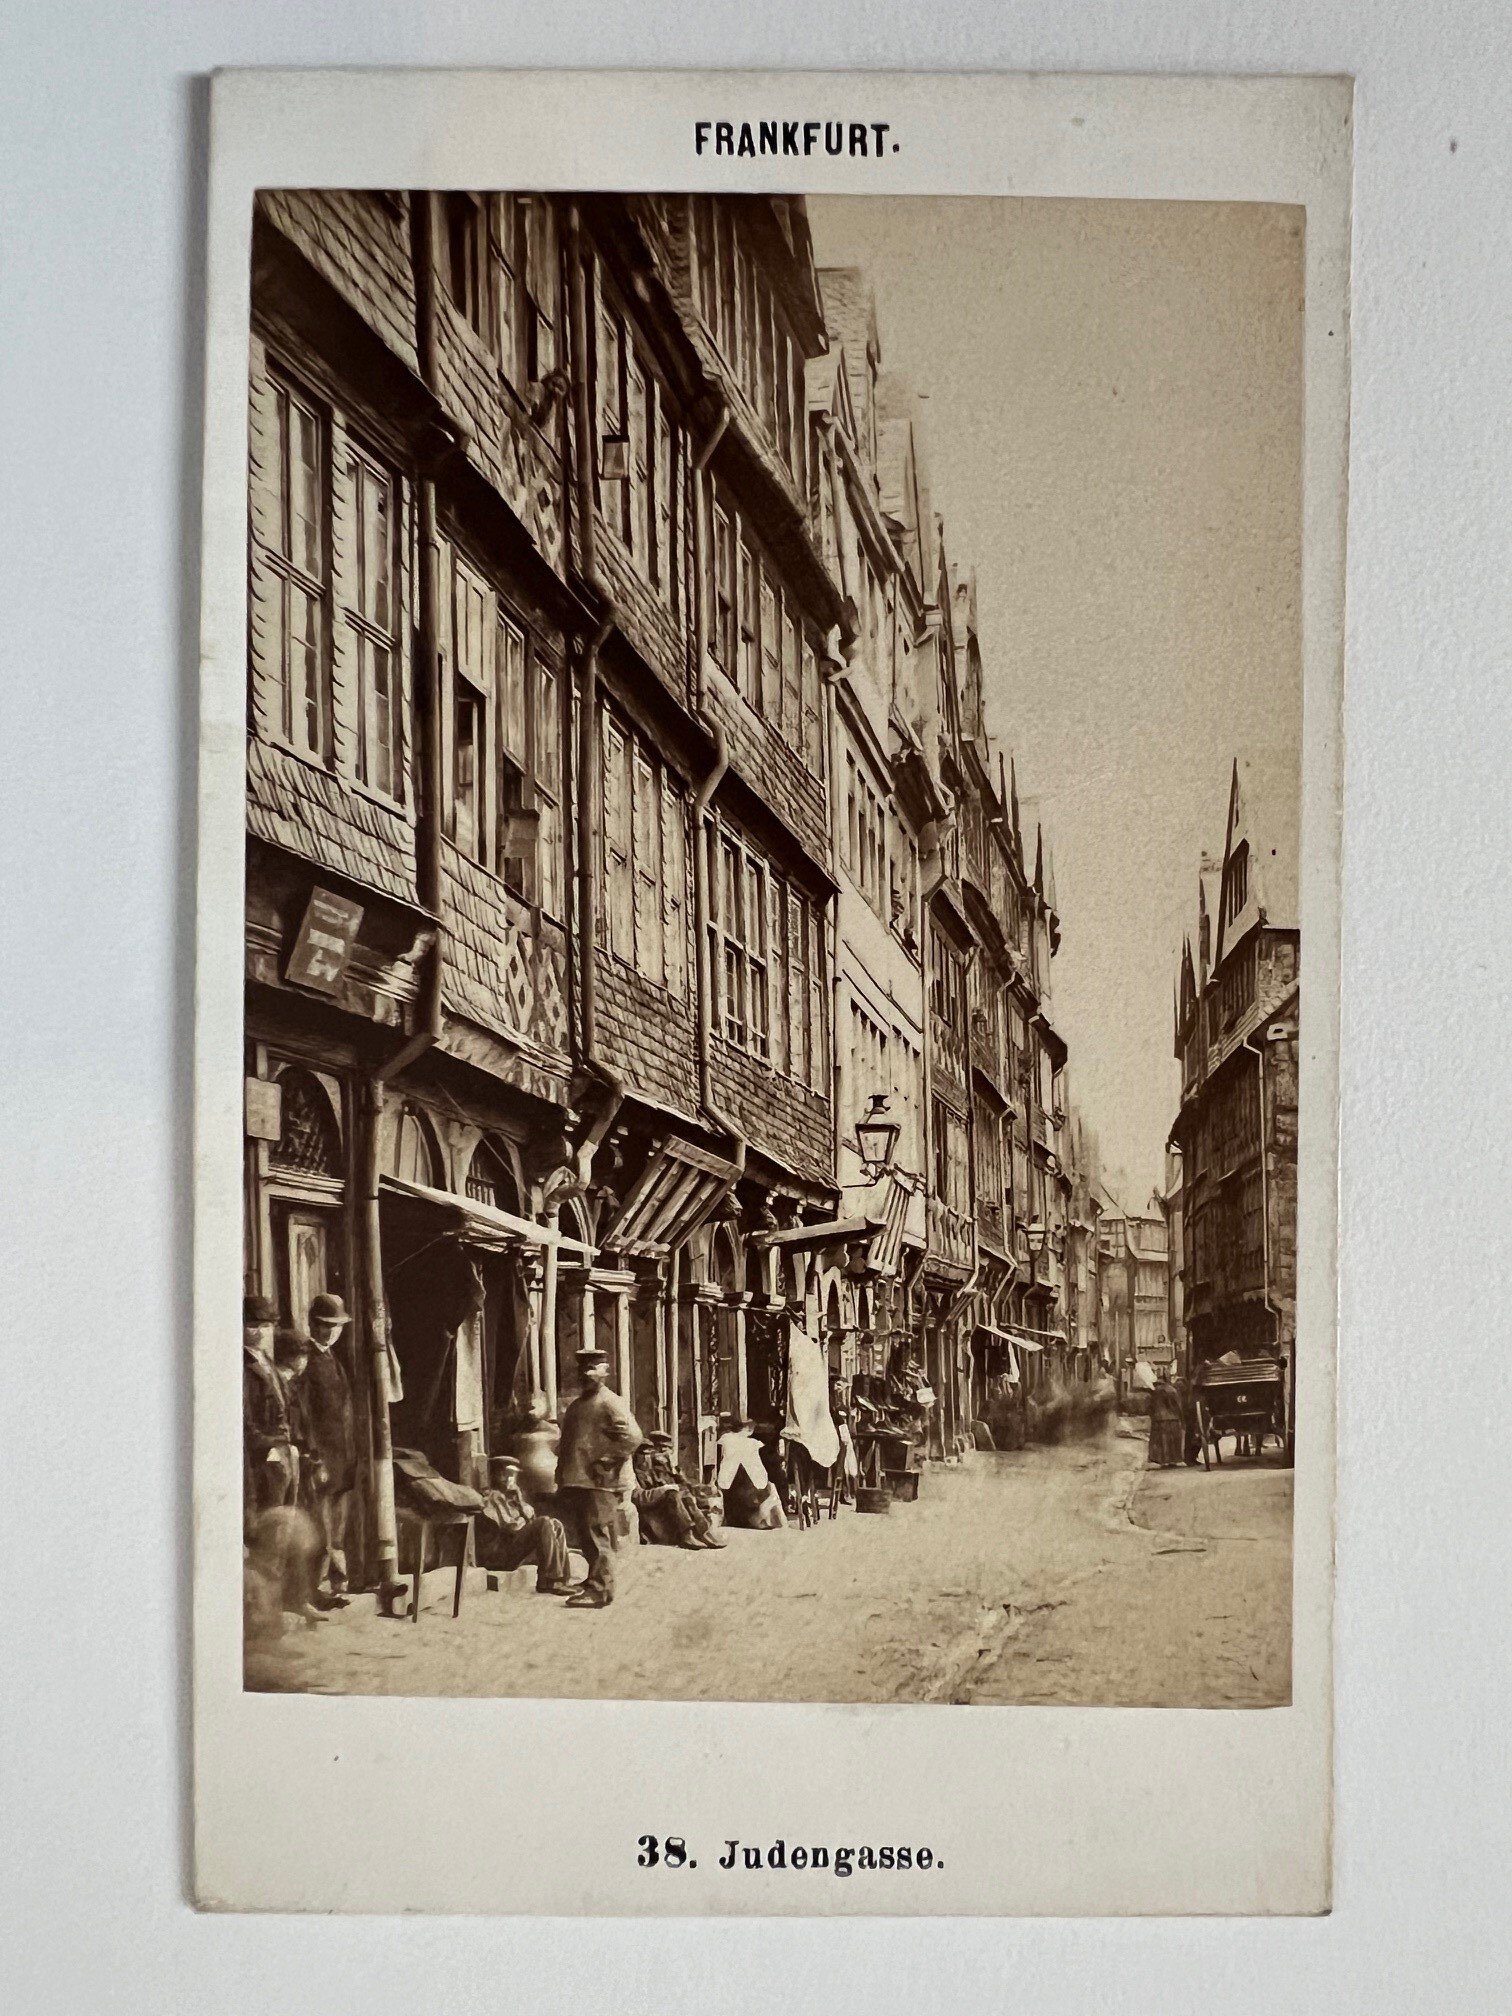 CdV, Frantisek Fridrich, Frankfurt, Nr. 38, Lutherhaus, ca. 1875. (Taunus-Rhein-Main - Regionalgeschichtliche Sammlung Dr. Stefan Naas CC BY-NC-SA)